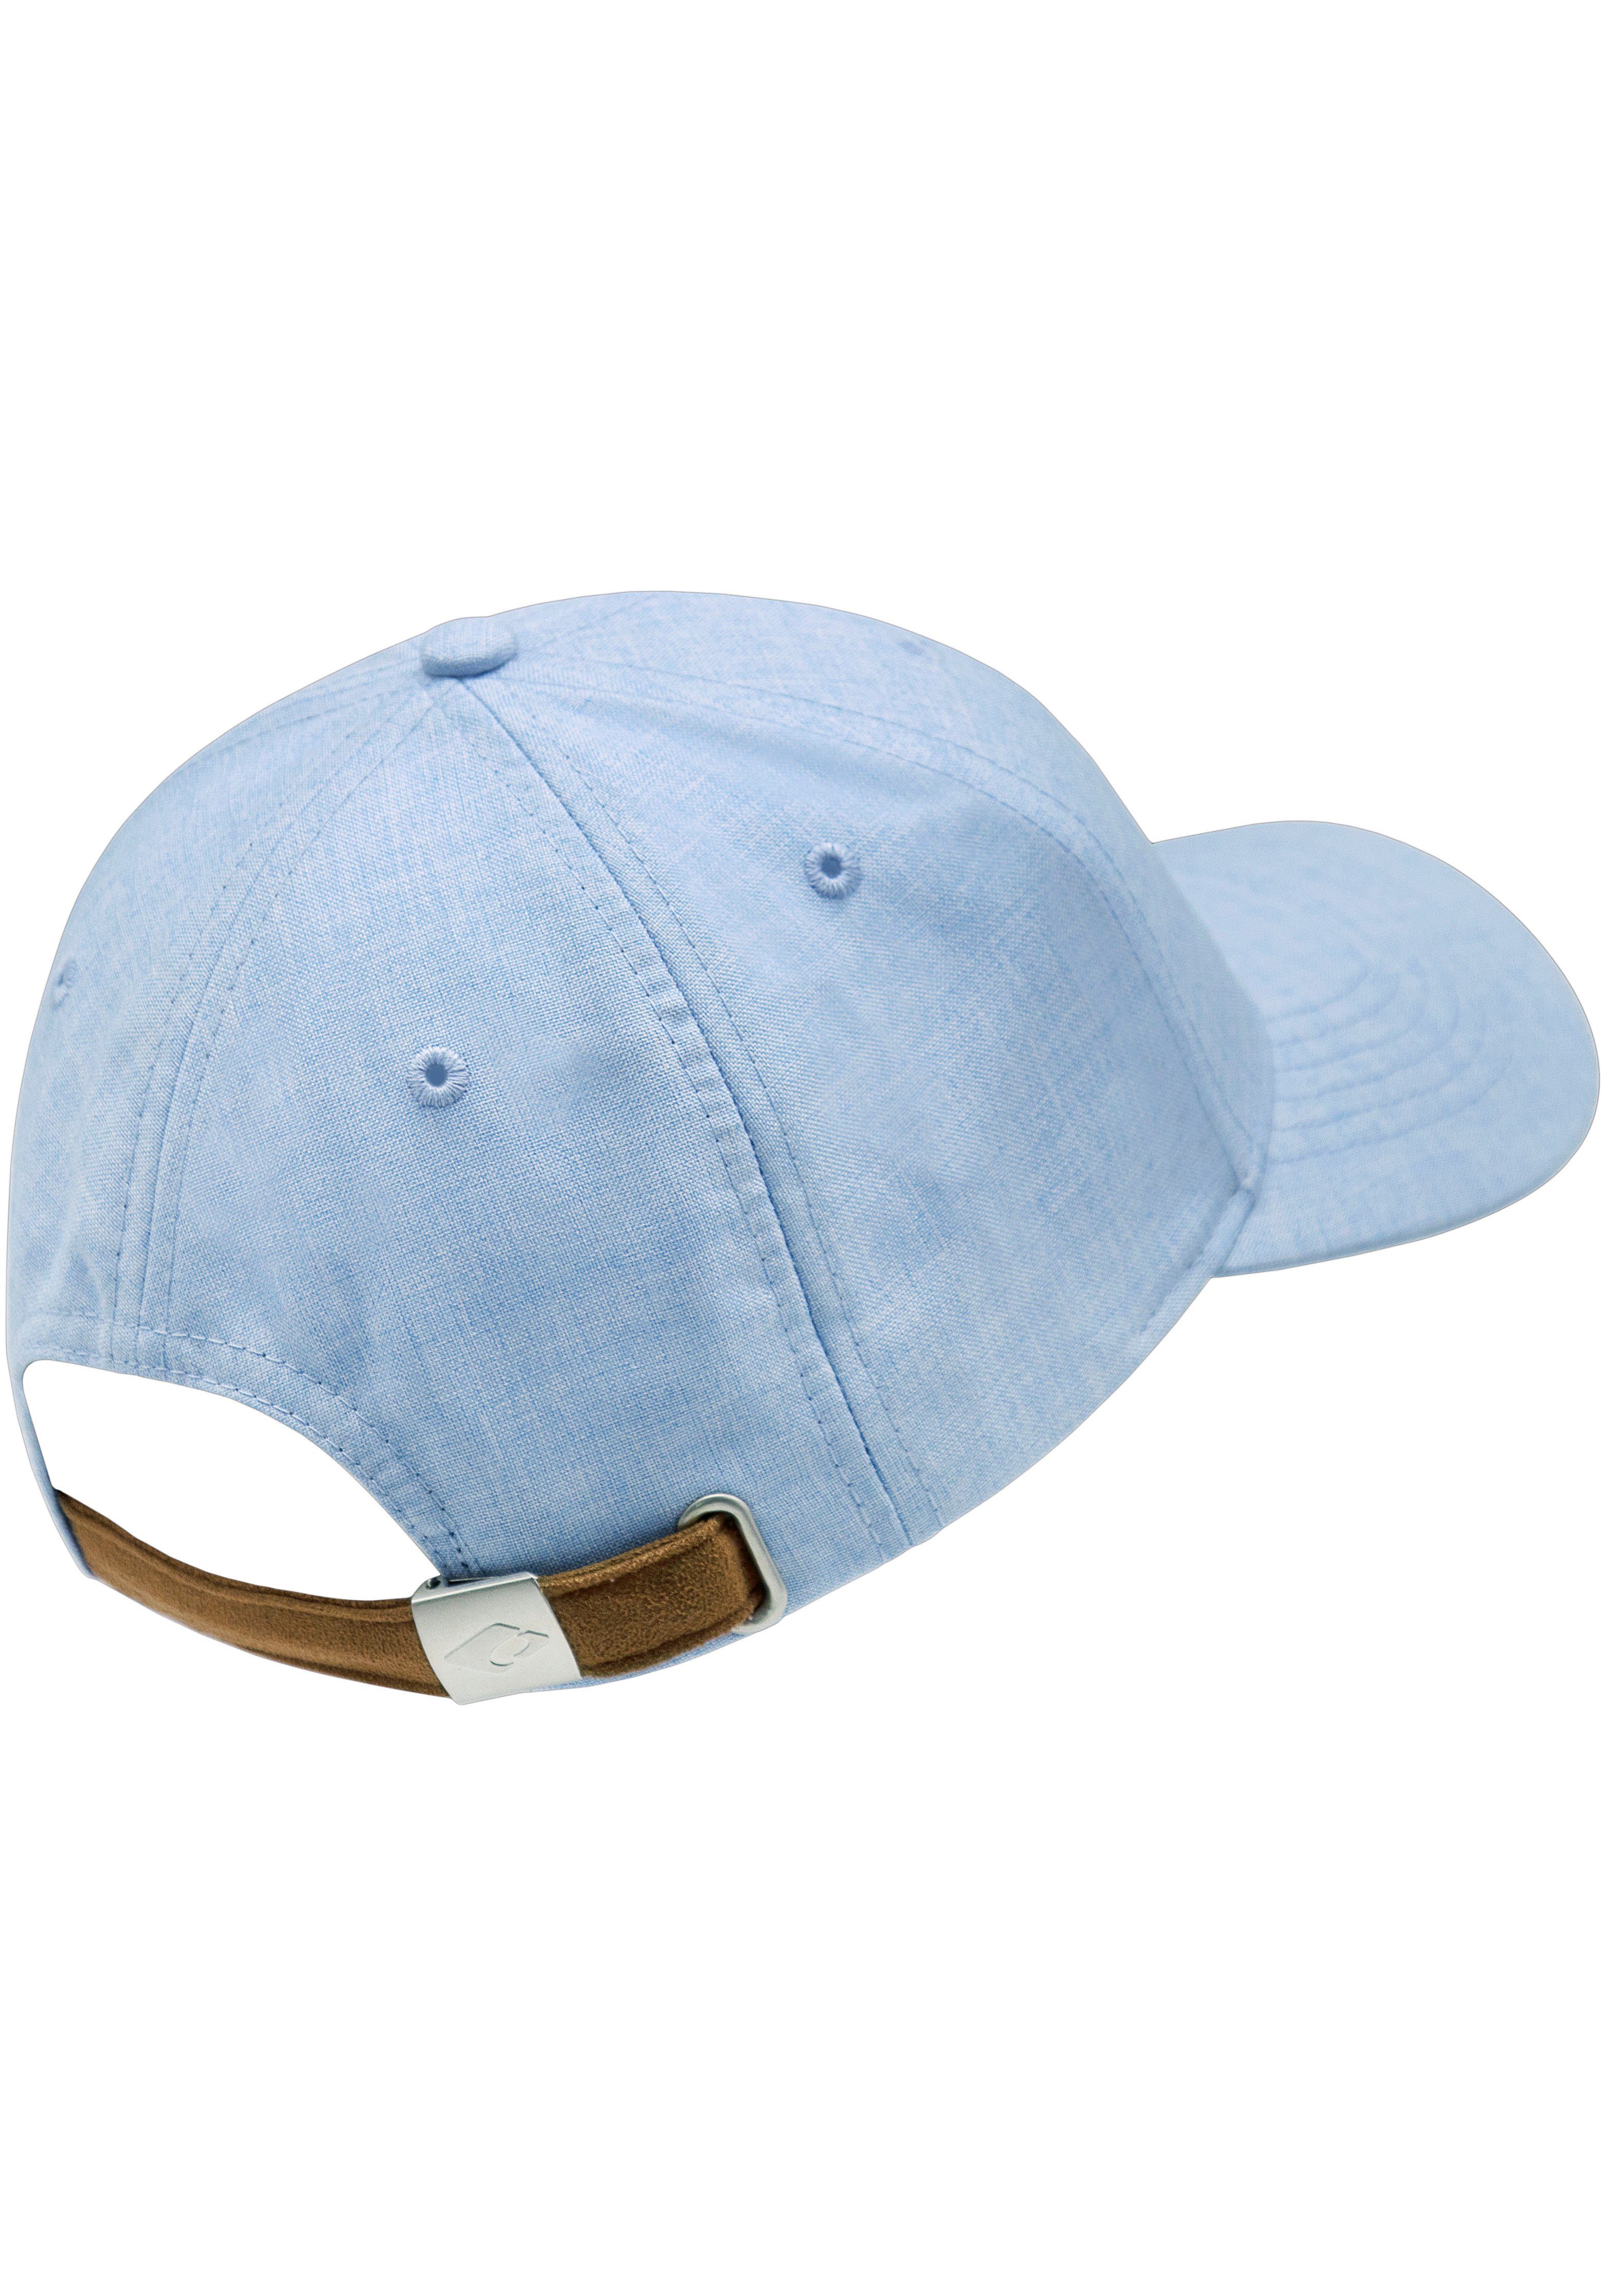 chillouts Baseball Cap Amadora Hat verstellbar melierter hellblau Optik, Size, in One